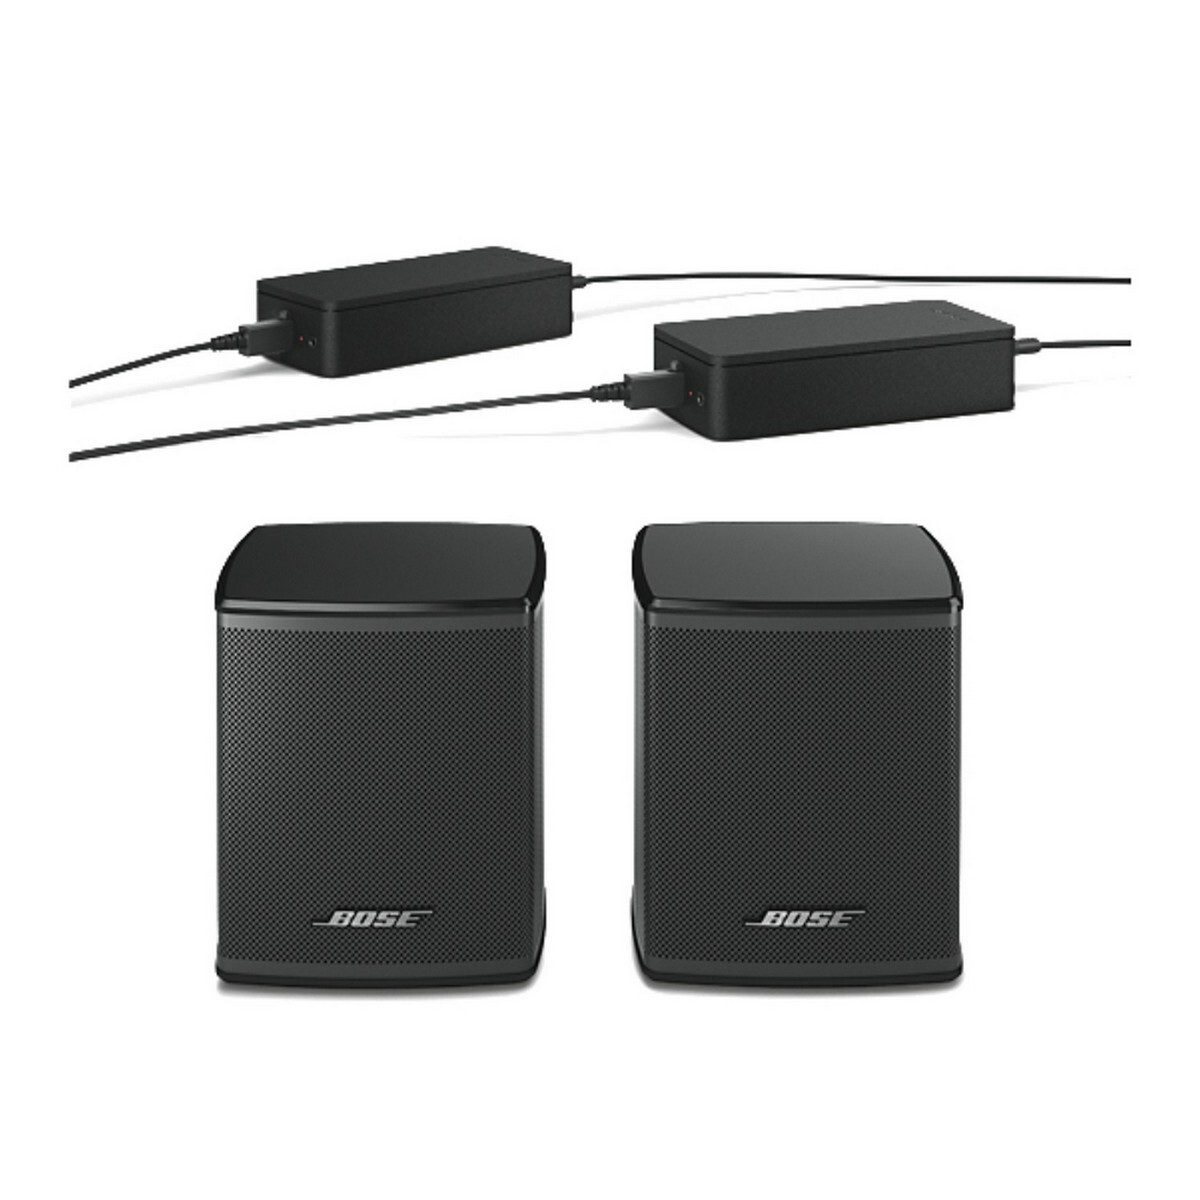 Bose Surround Speaker Black